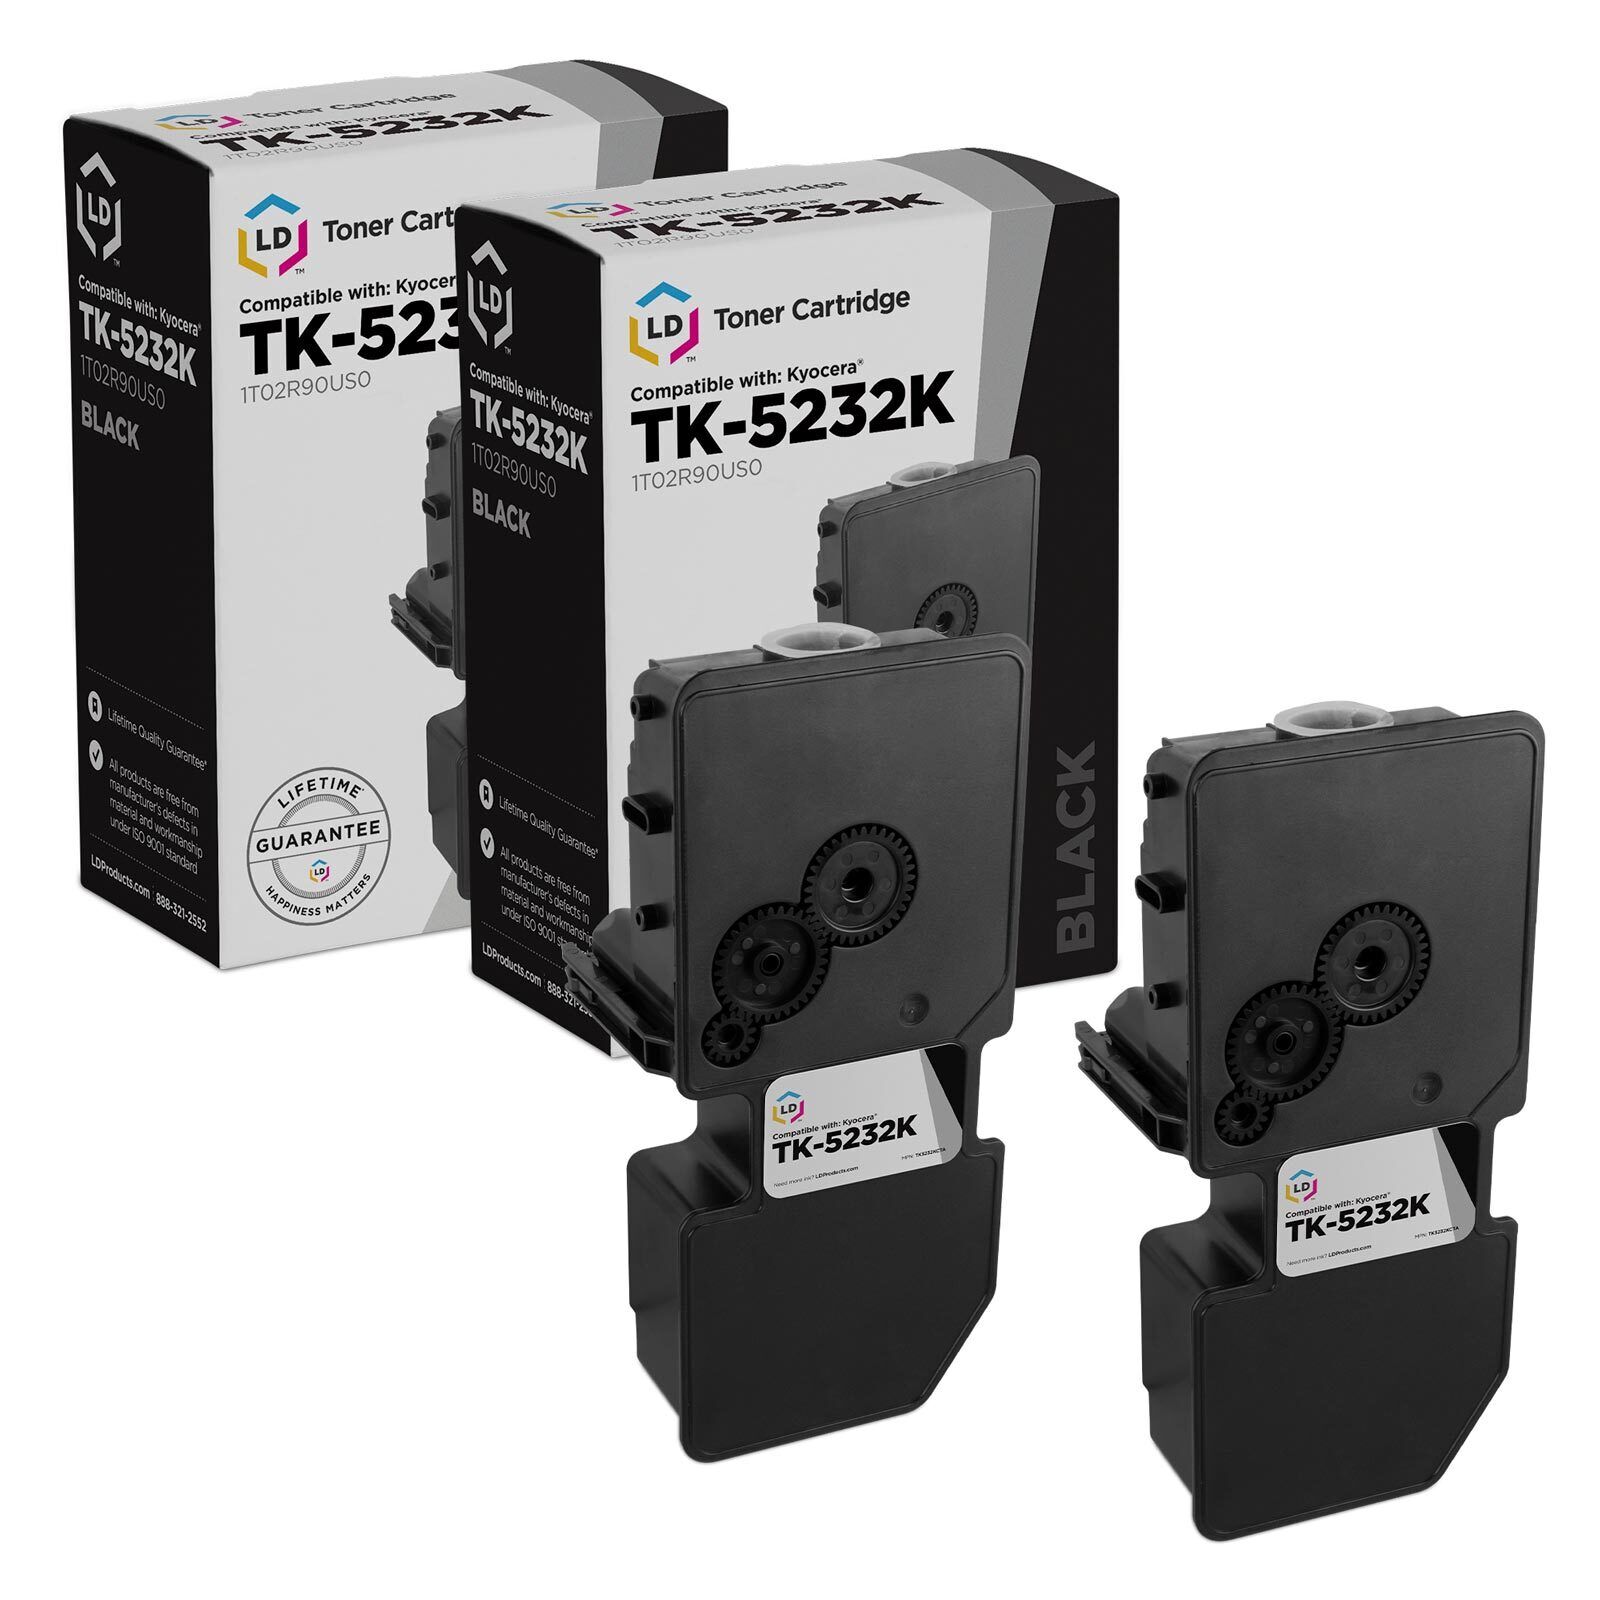 LD Compatible Kyocera TK-5232K Black Toner 2-Pack for ECOSYS M5521cdw & P5021cdw